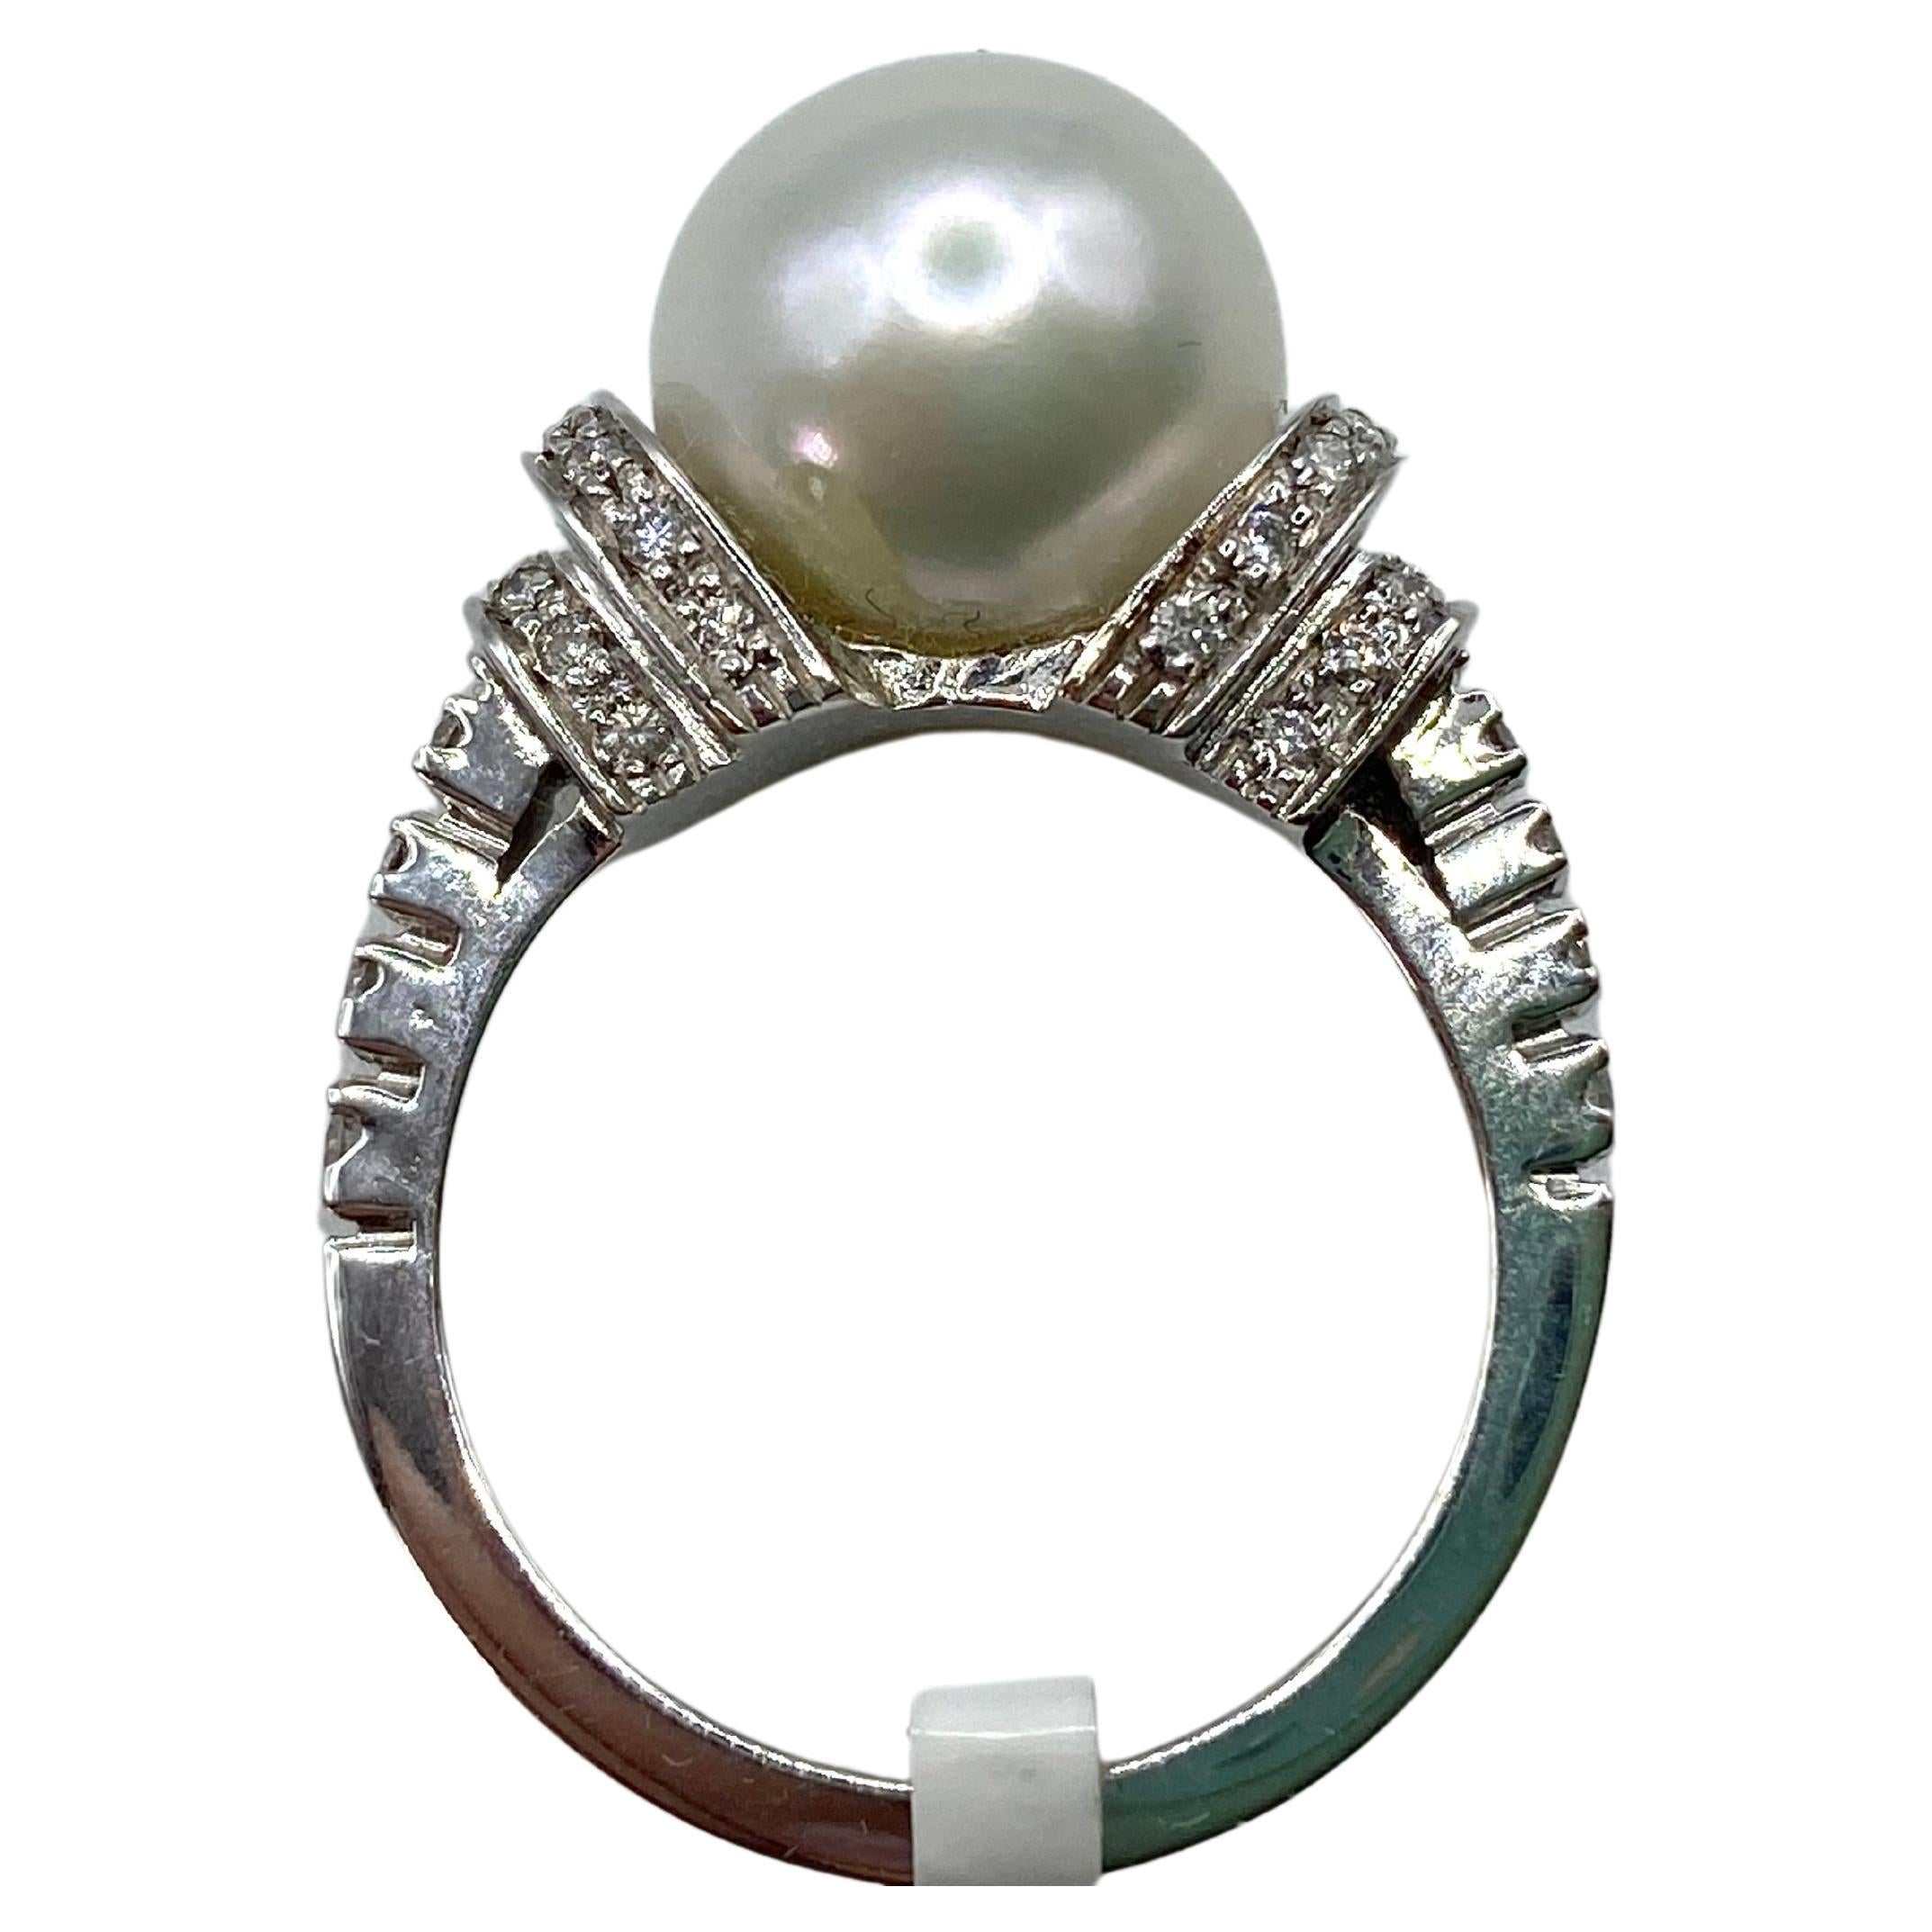 18 kt white gold ring, Australian cultured pearl mm 11, brilliant cut diamonds
Handmade. The Australian cultured pearl, called , ct 9 , measures 11 mm.  18 kt gold. Brilliant cut diamonds set, color G, vs, 0.35 ct; It weighs 9.1 grams, size 13 (on